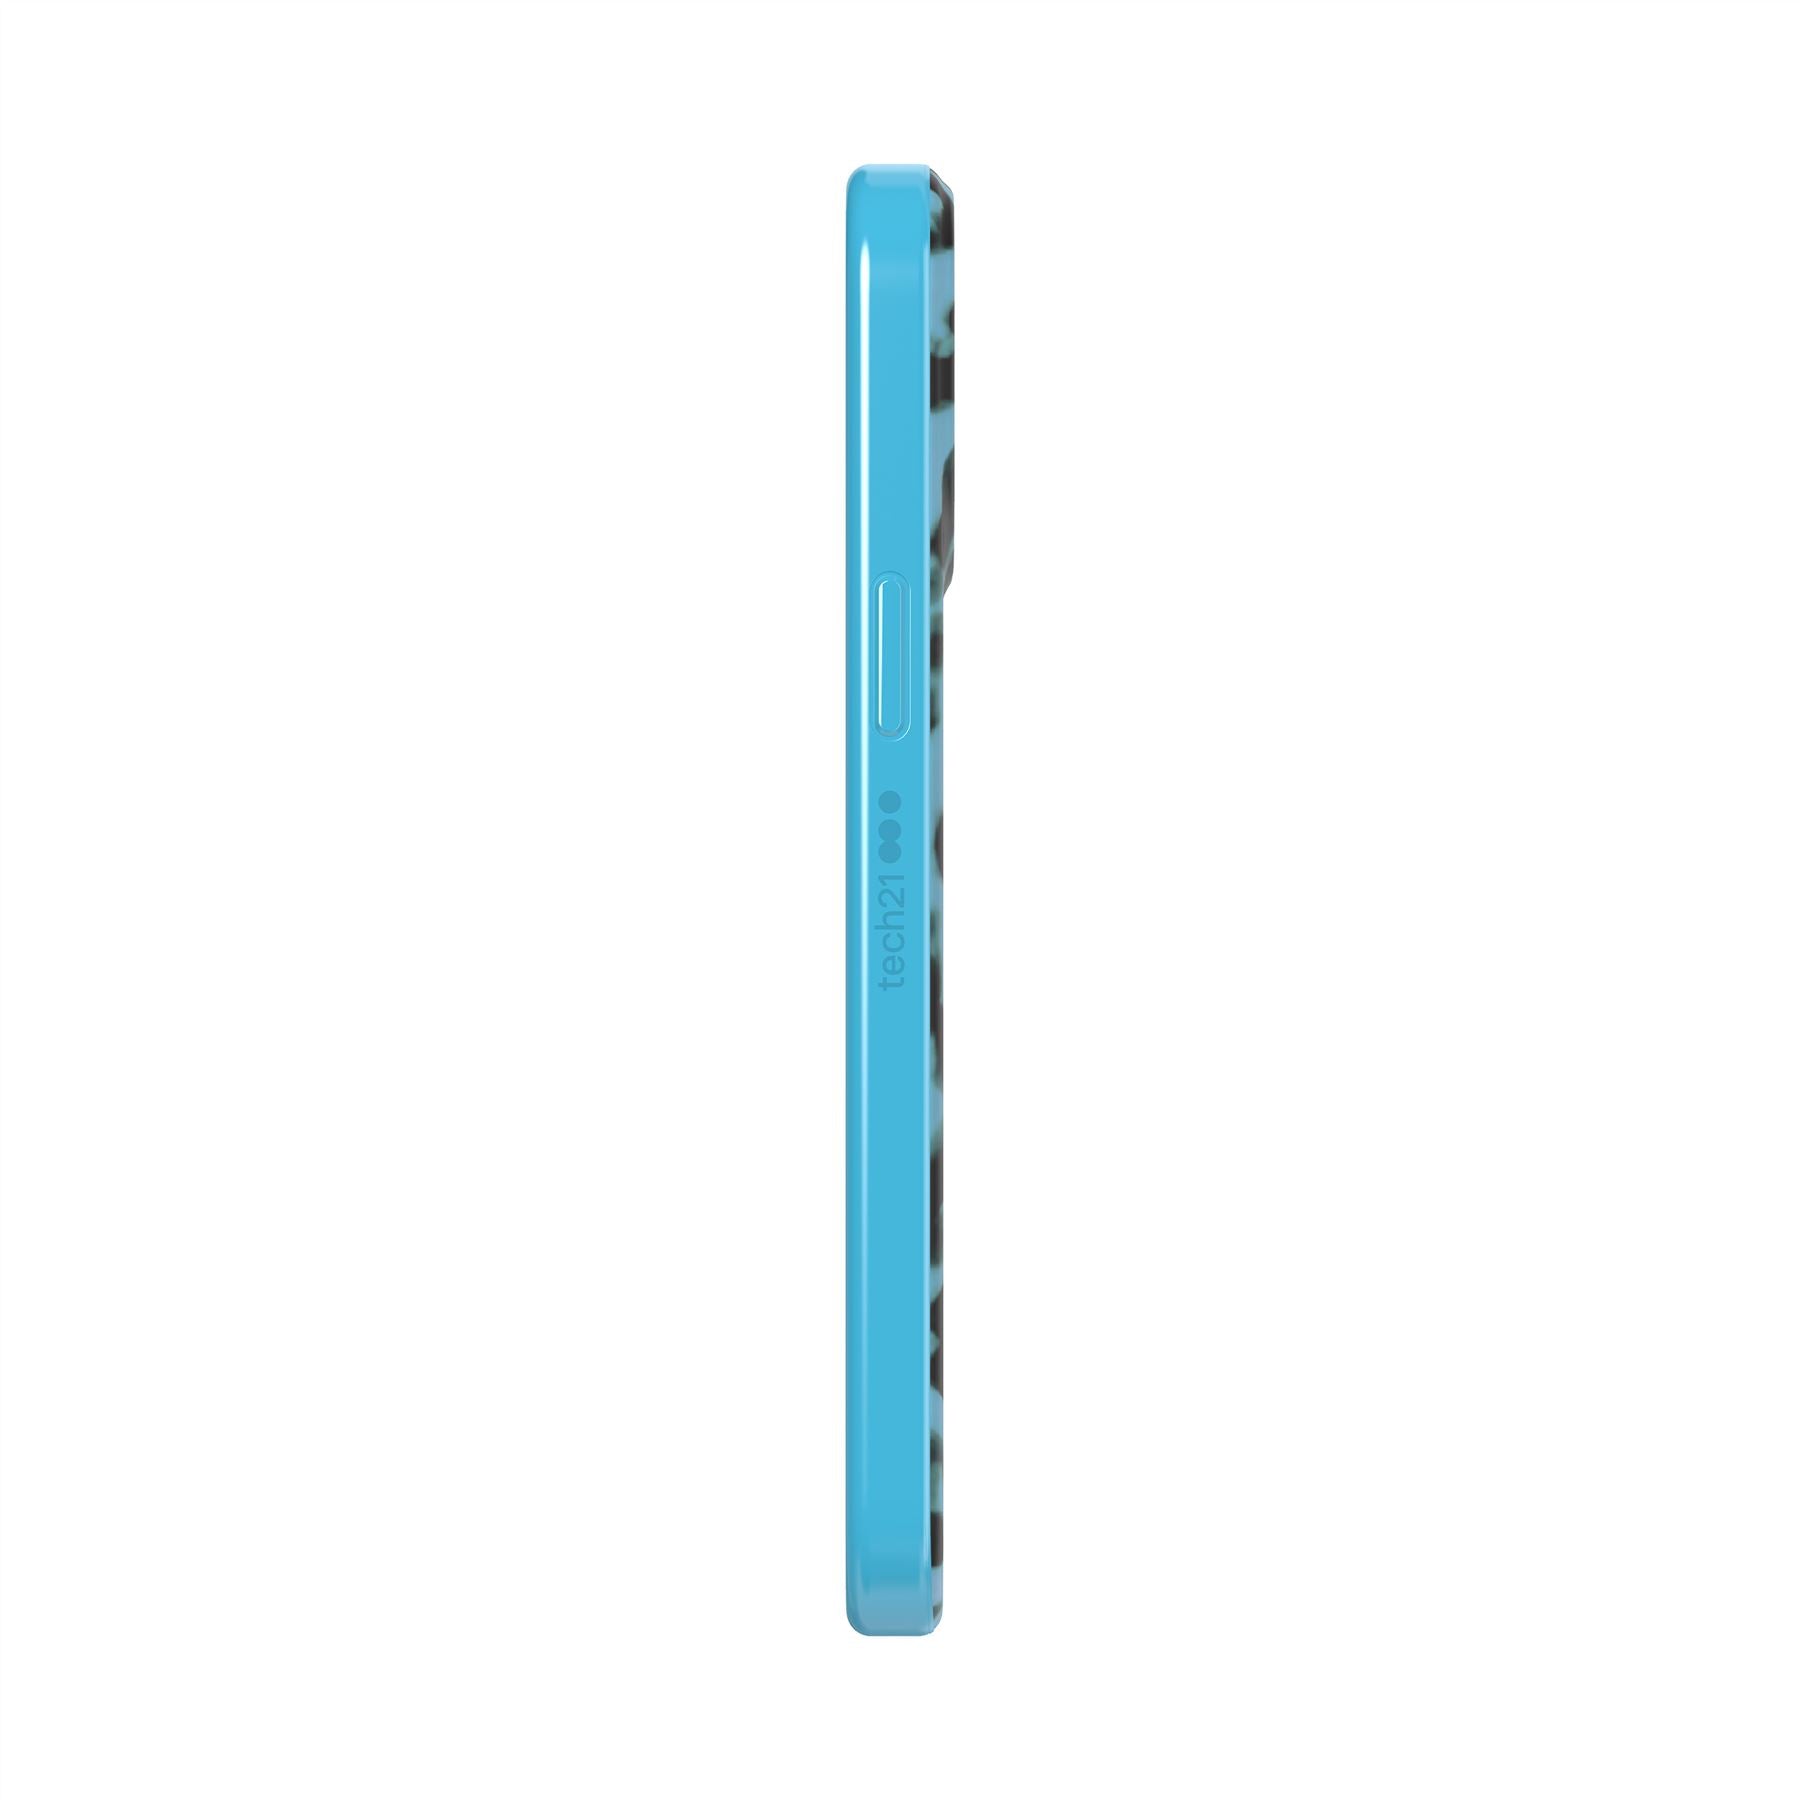 Evo Art - Apple iPhone 12 Pro Max Case - Dusty Blue